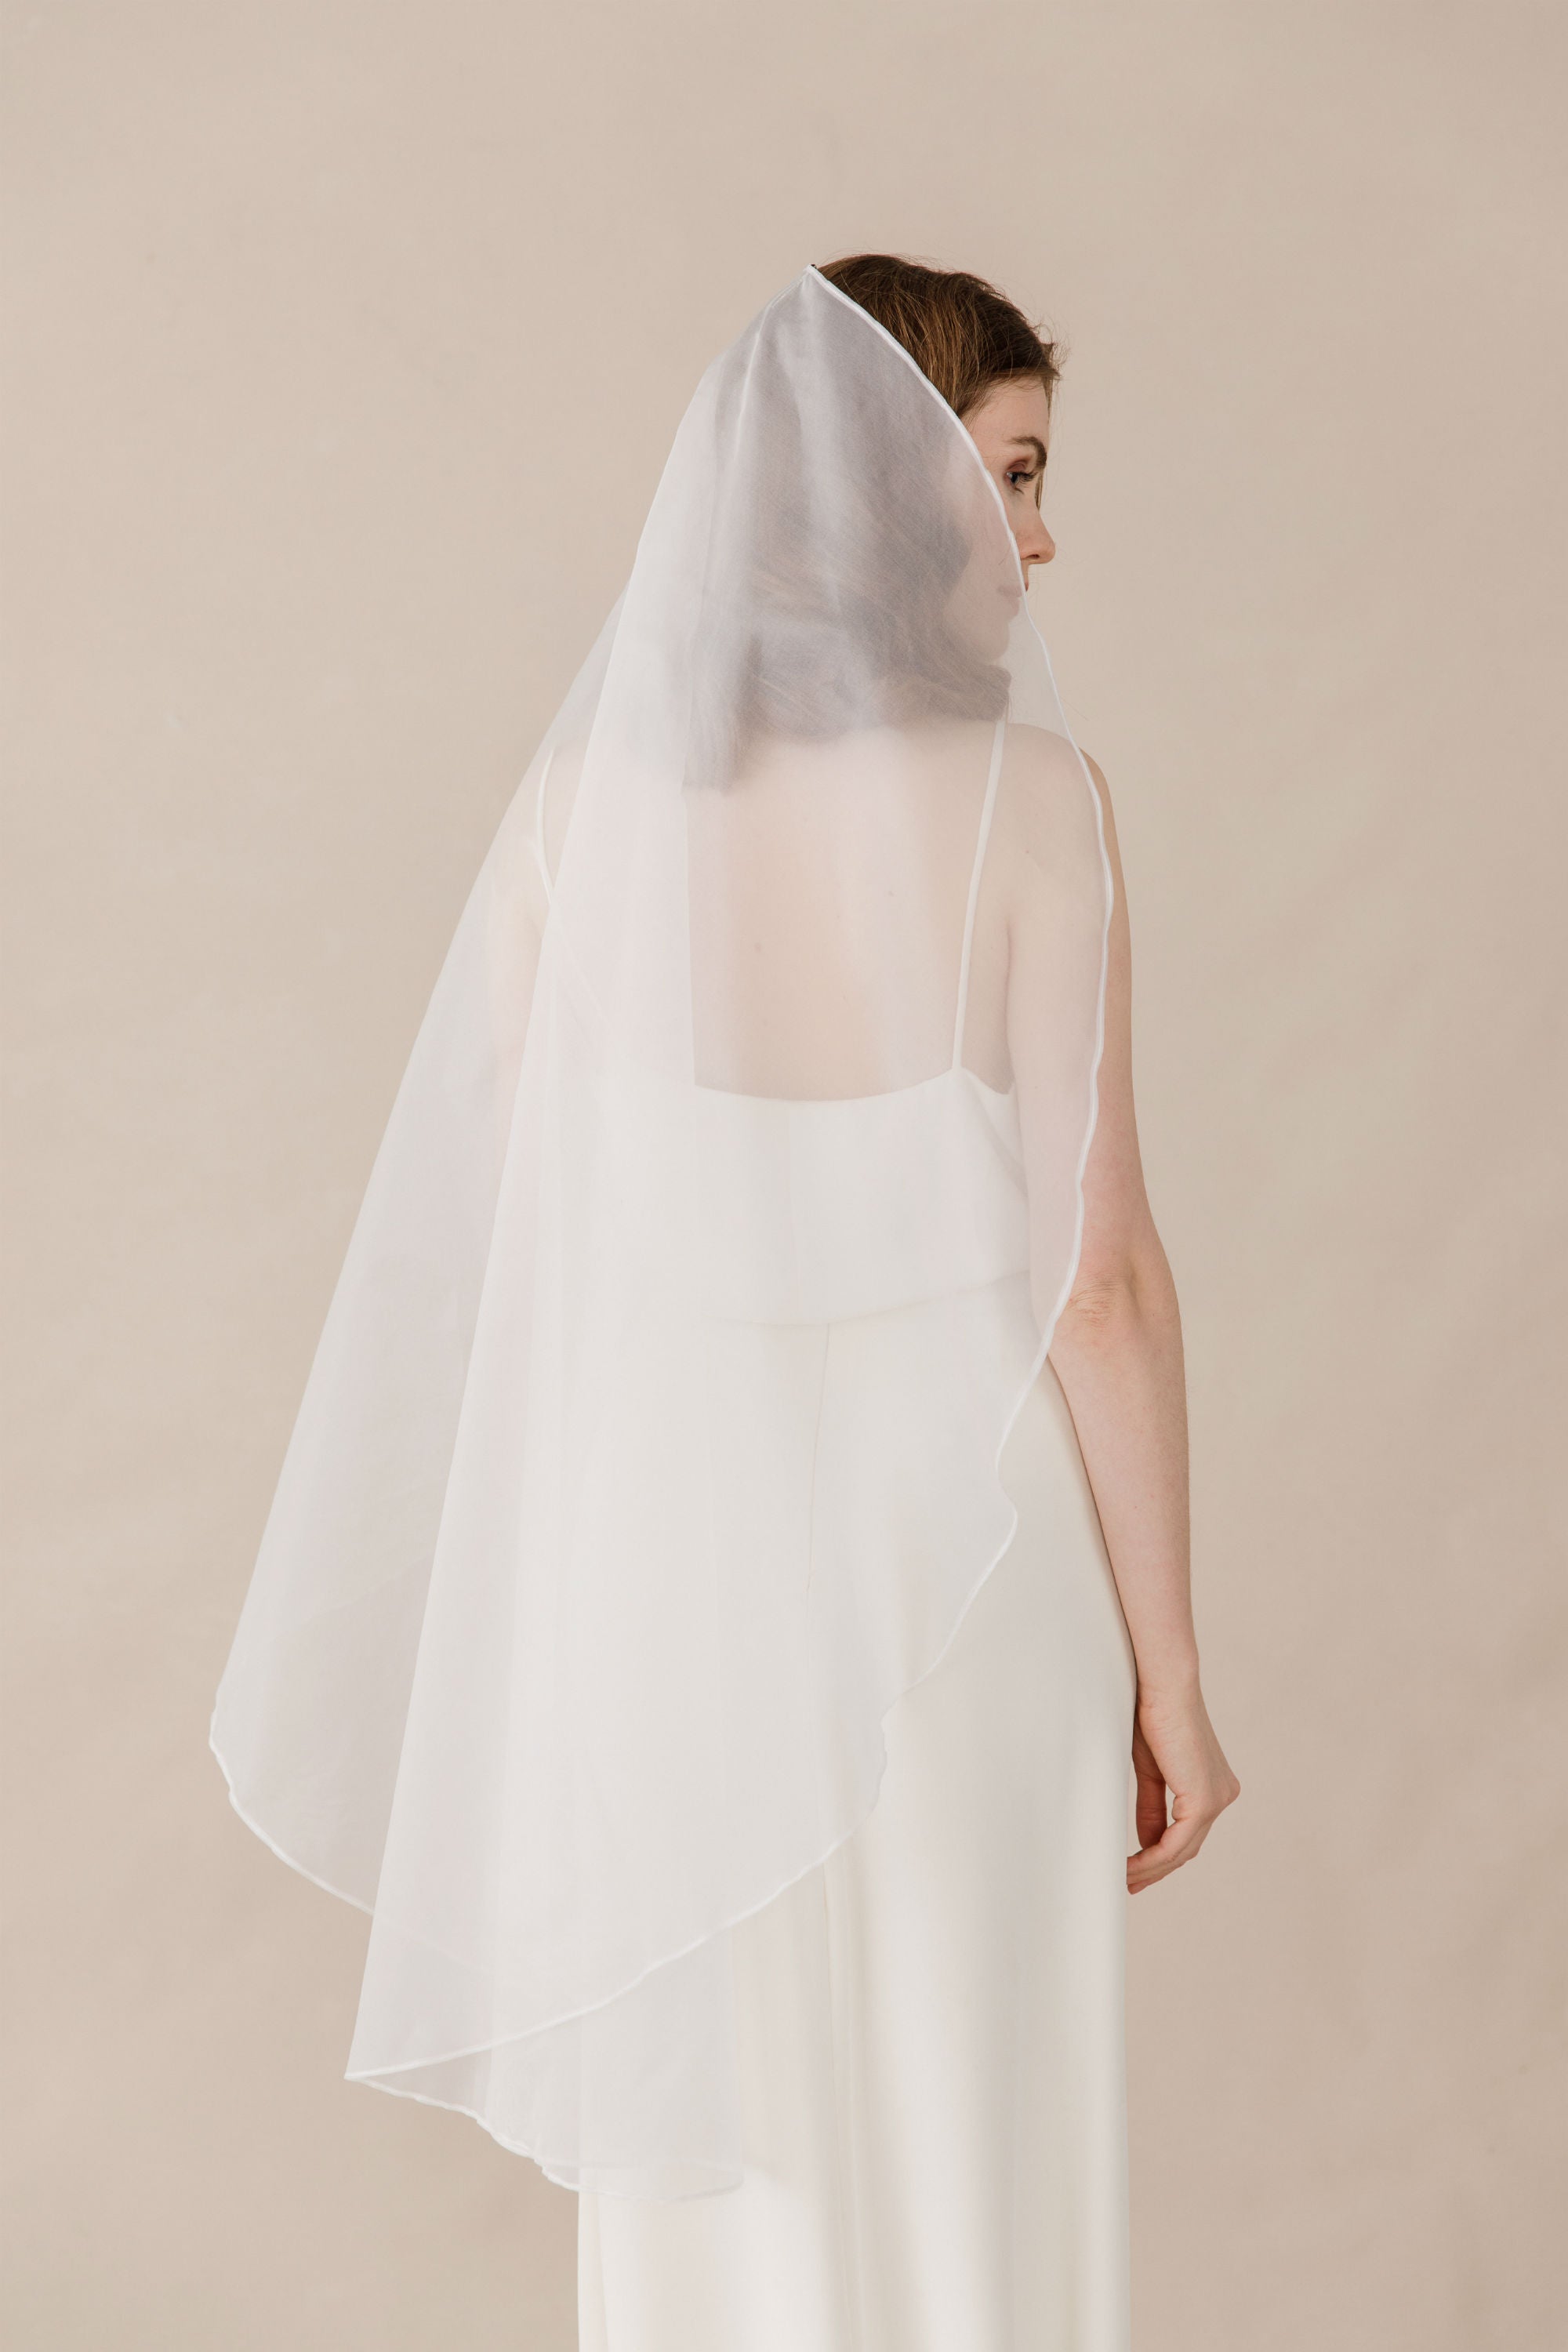 silk organza wedding veil